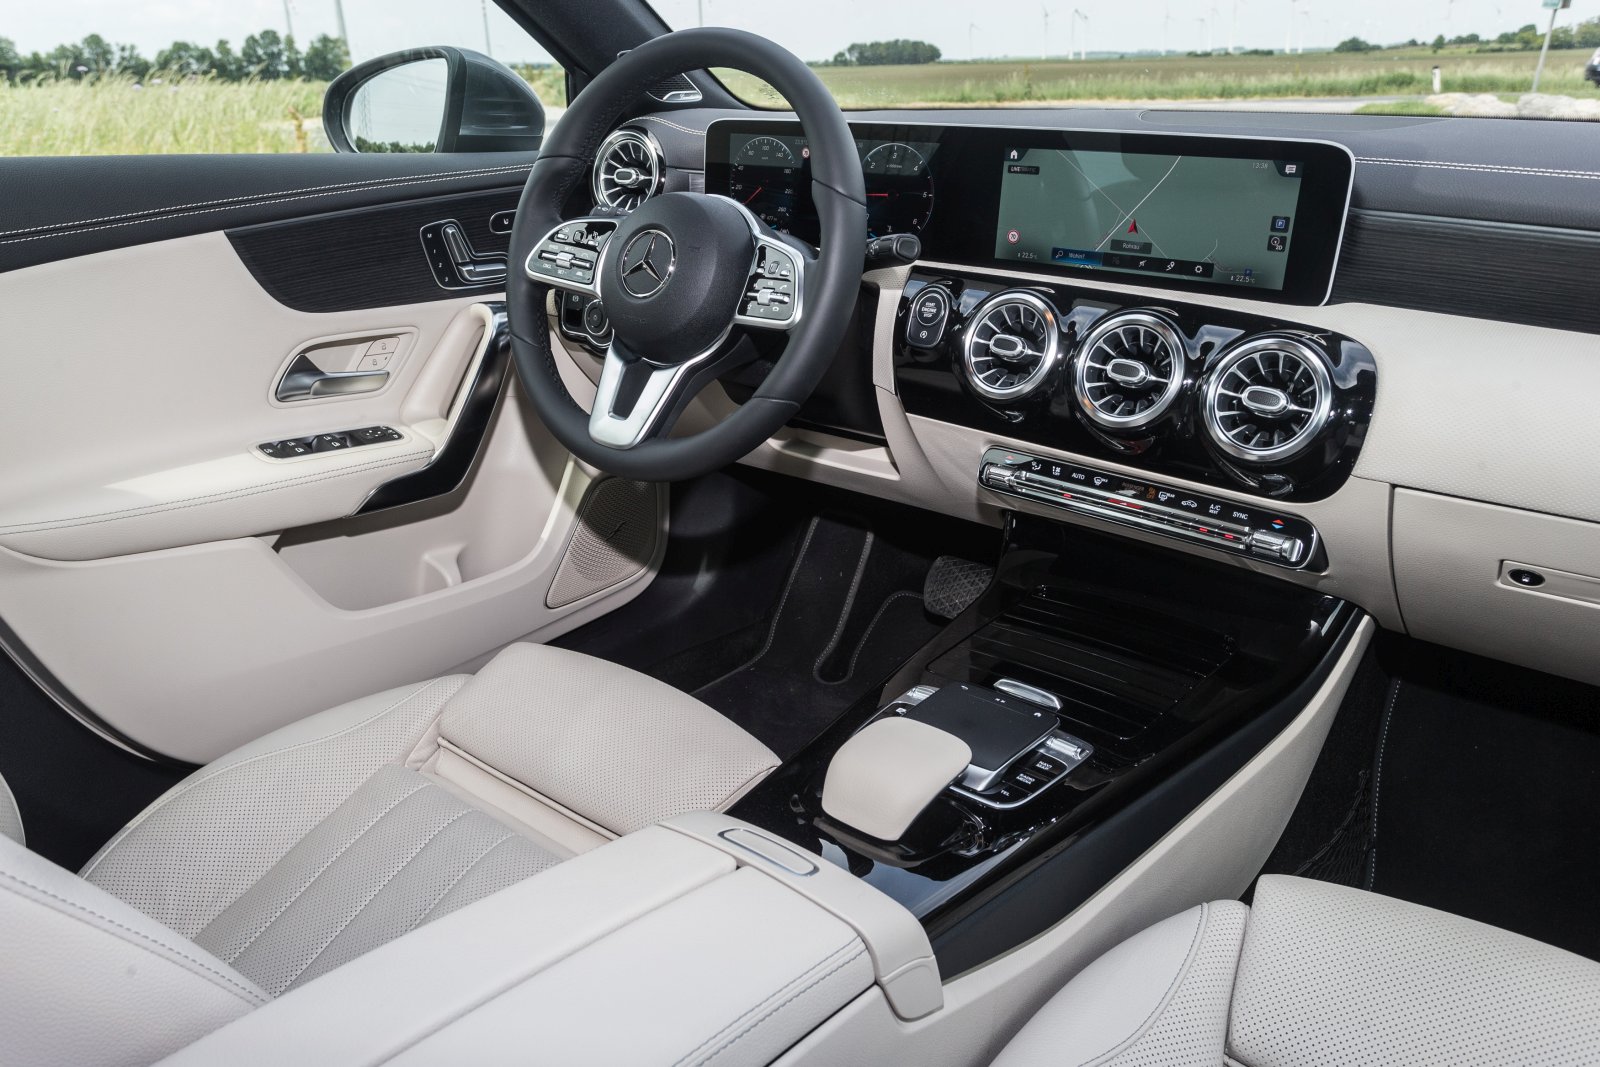 DIYUCAR Für Benz A Klasse W177 A180 A200 2019 Auto Innenraum